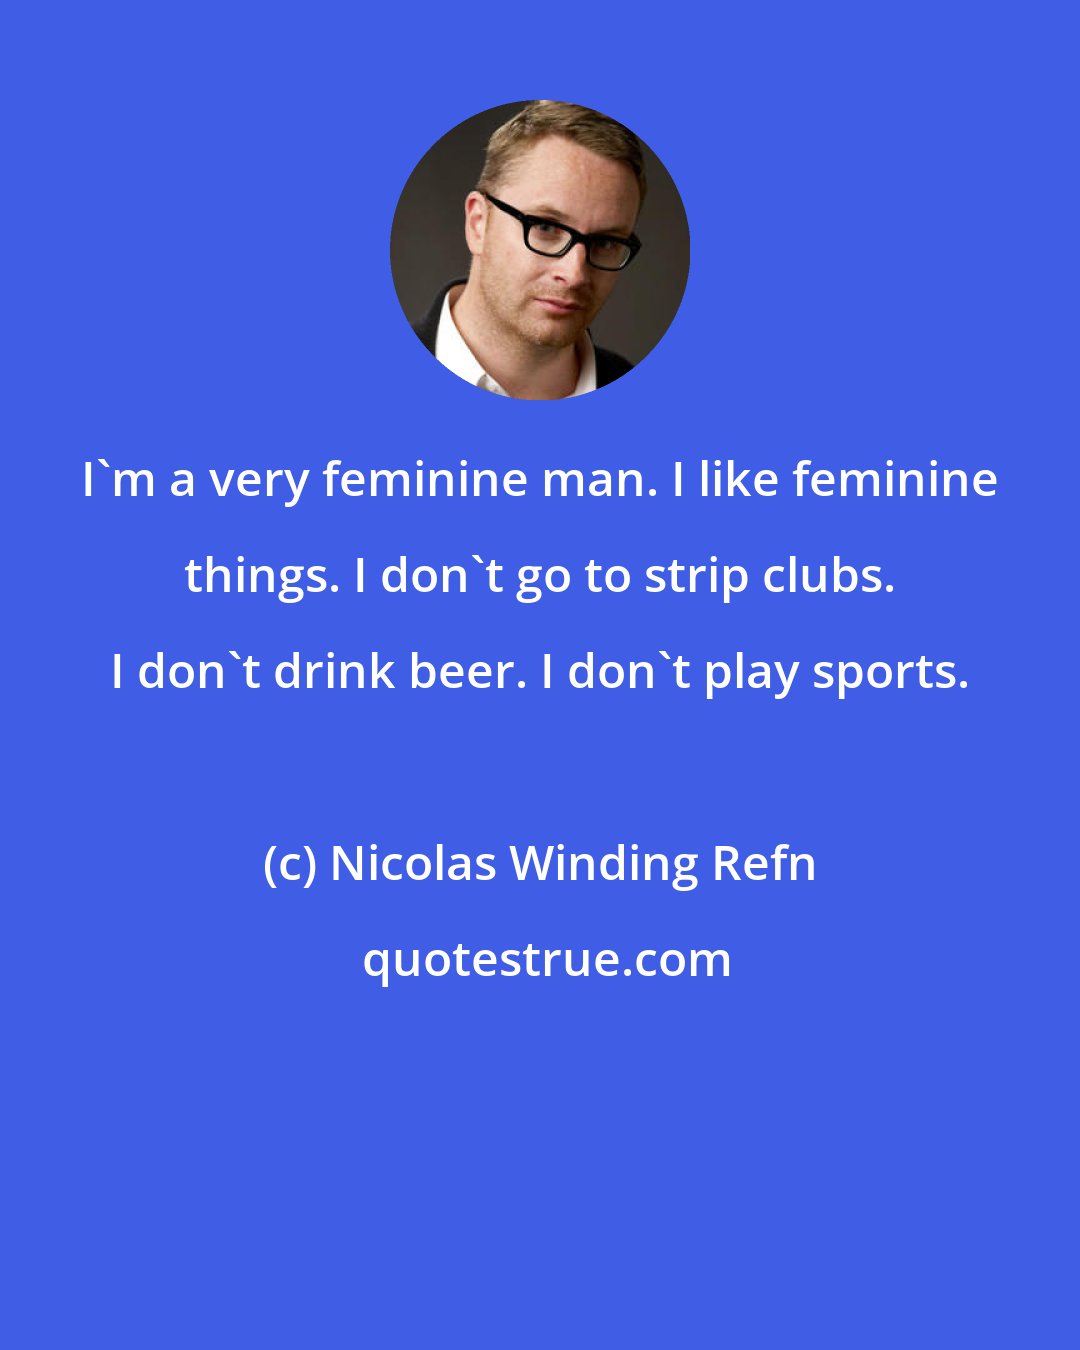 Nicolas Winding Refn: I'm a very feminine man. I like feminine things. I don't go to strip clubs. I don't drink beer. I don't play sports.